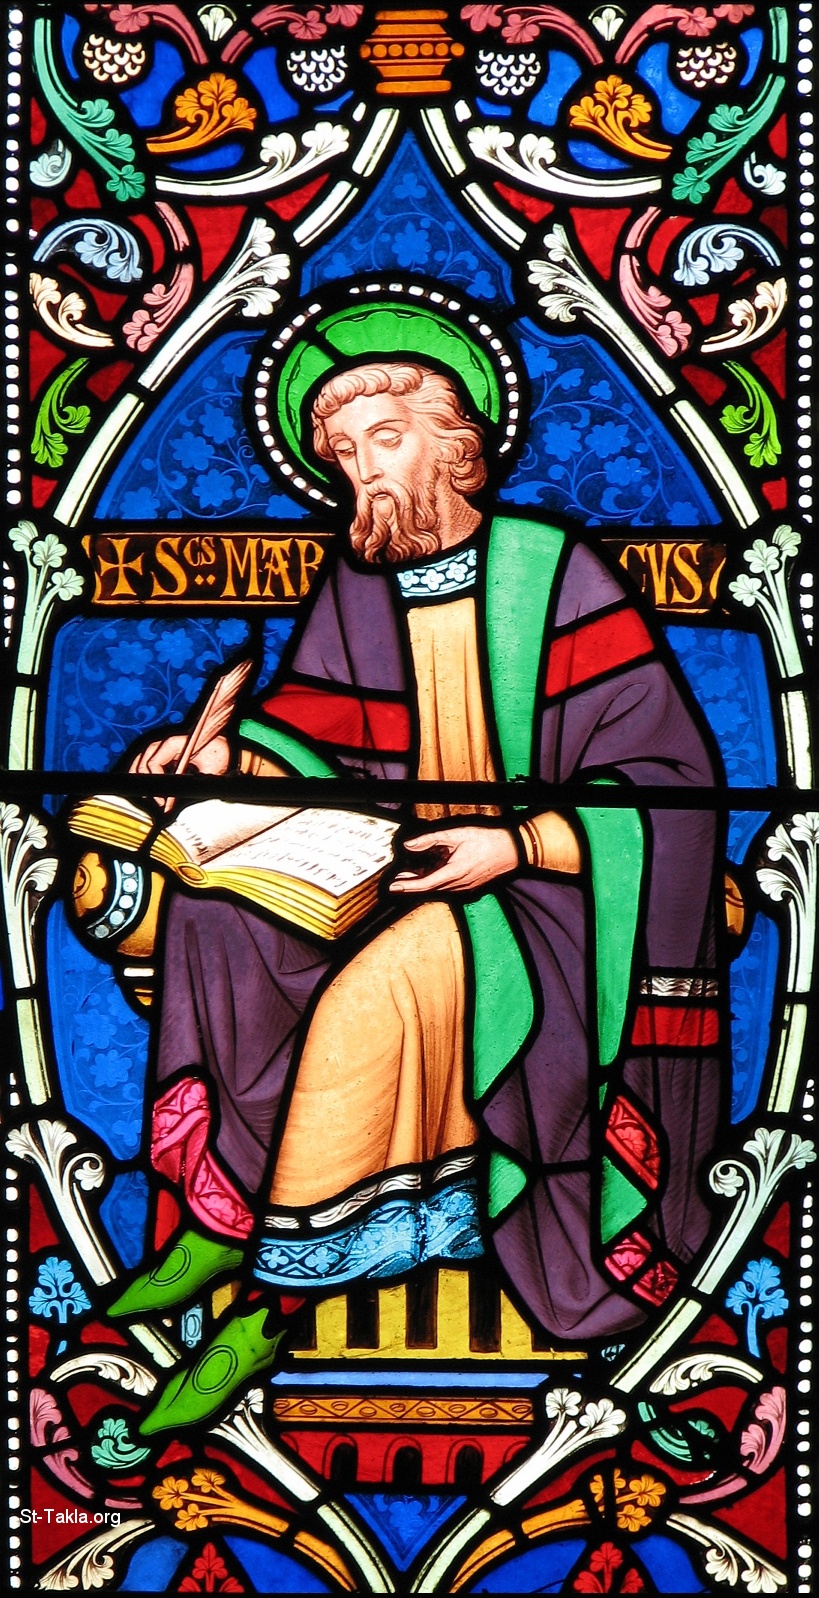 St-Takla.org         Image: Saint Mark the Evangelist stained glass window, Saint Mary de Castro church, Leicester, England :            ѡ 